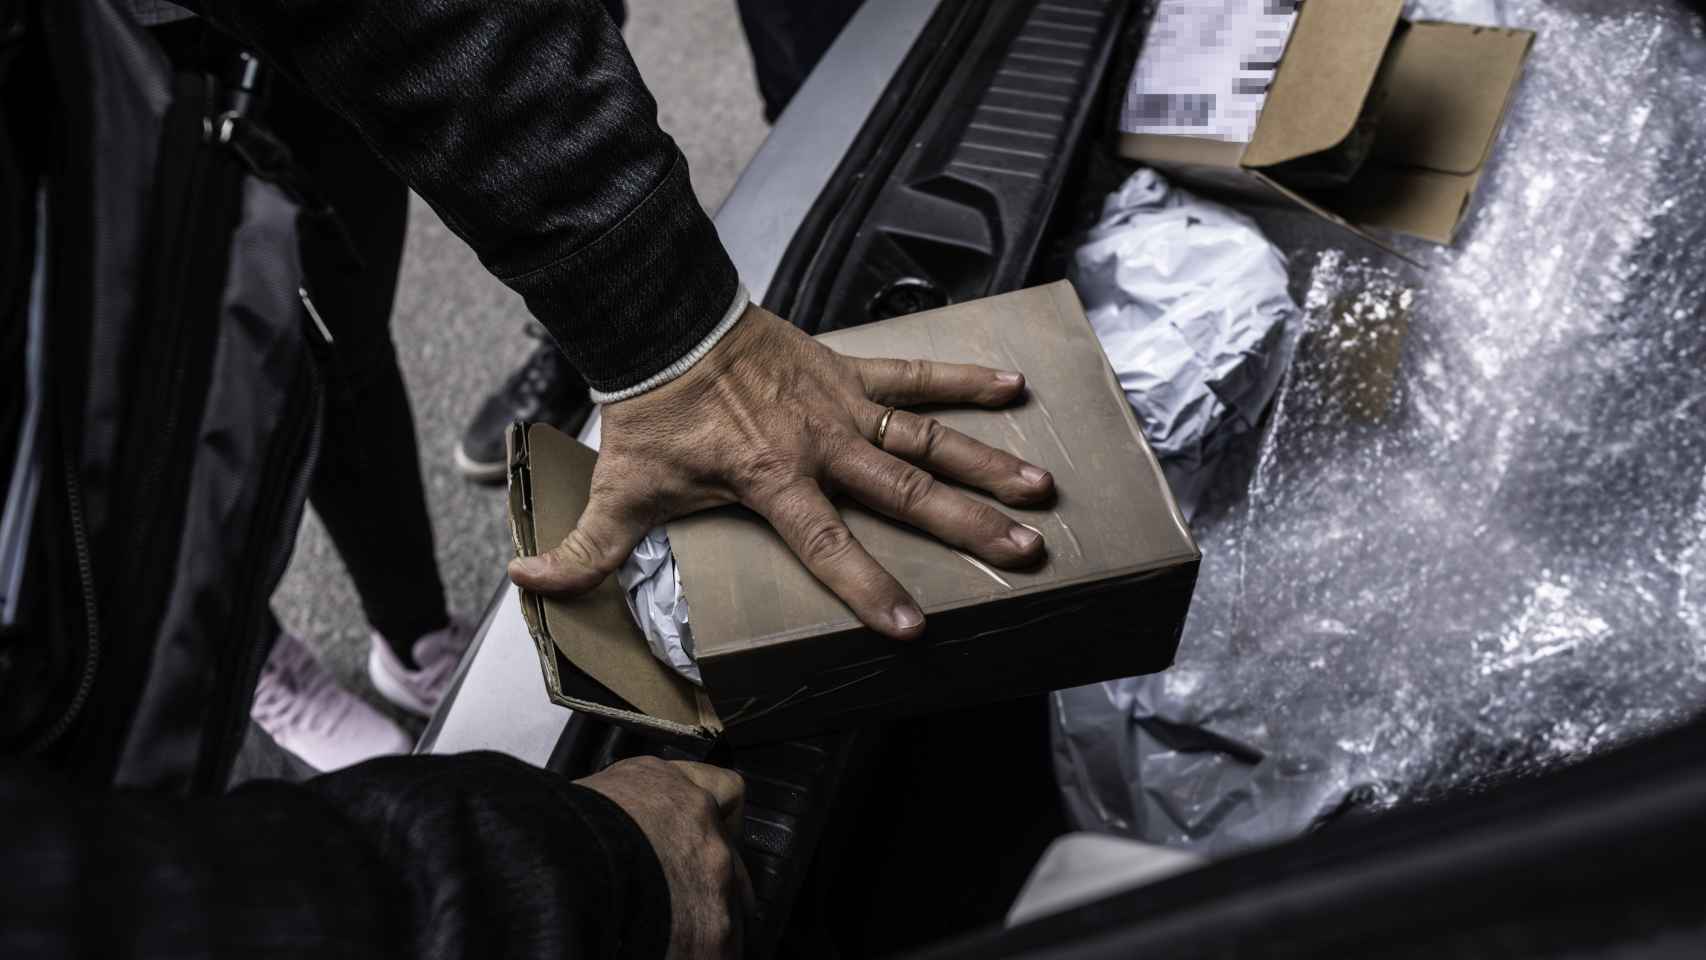 Los 'fura' de Barcelona abriendo una caja llena de marihuana